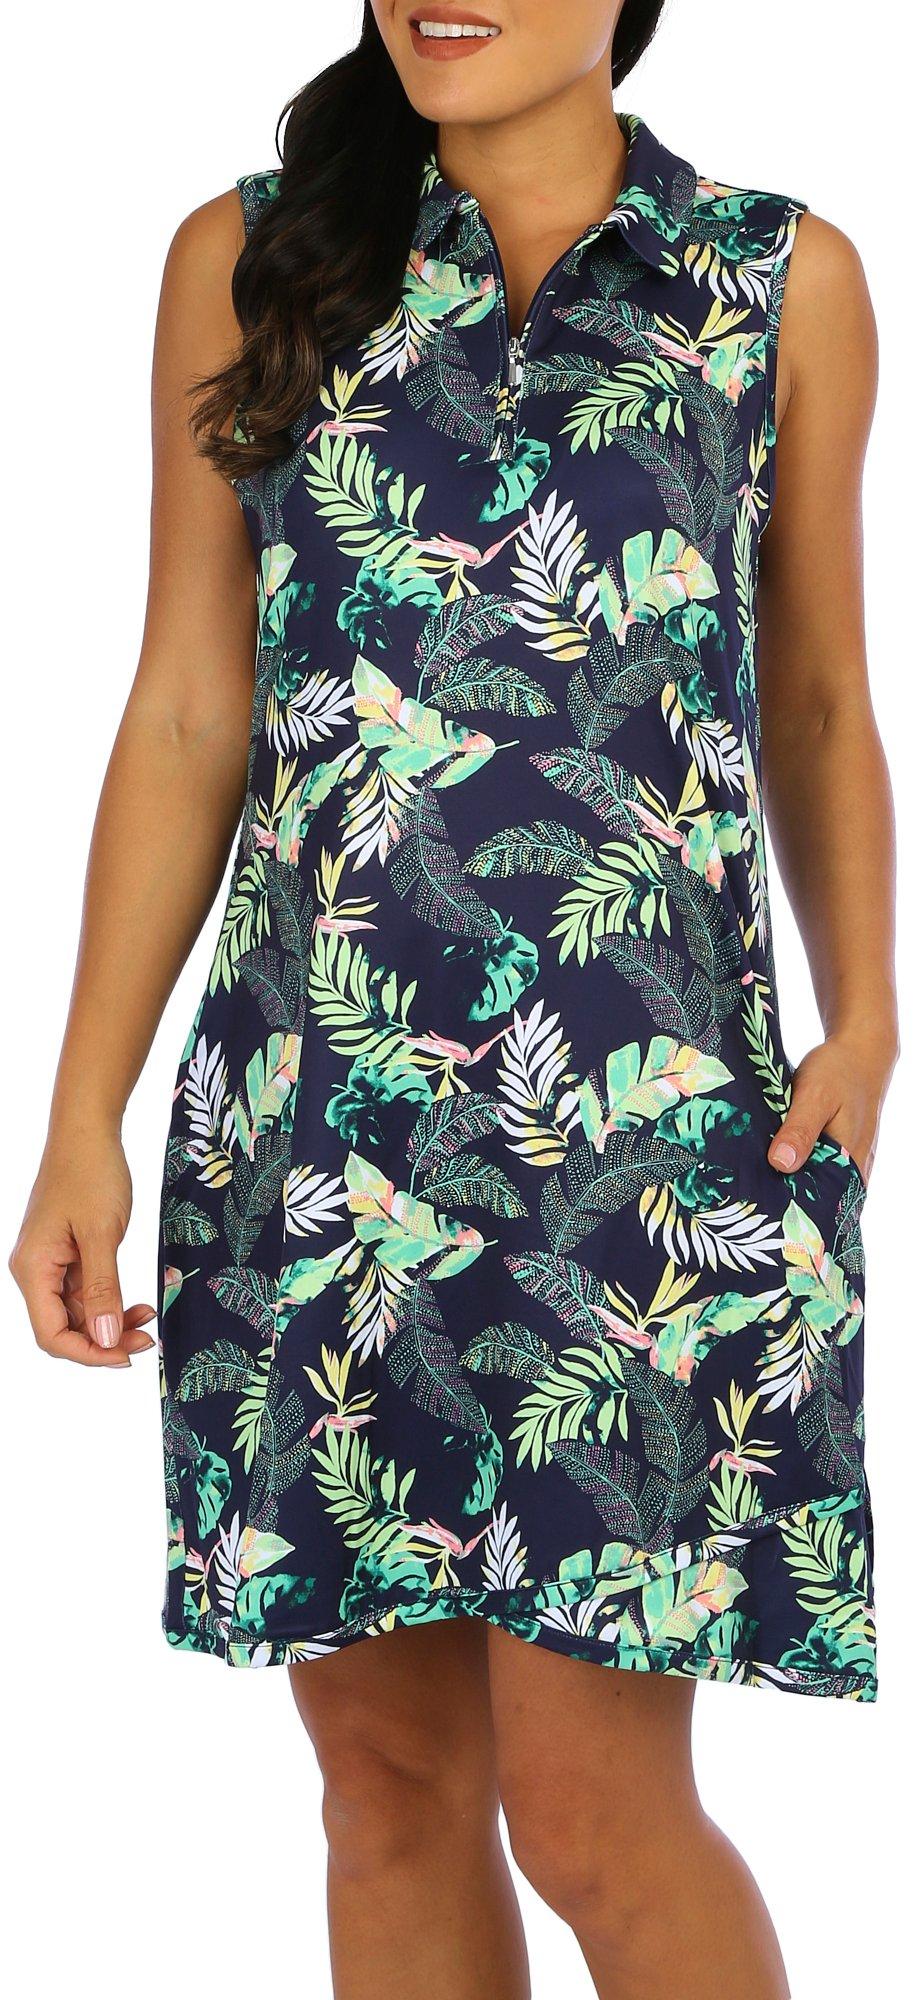 Coral Bay Golf Womens Foliage Print Dress